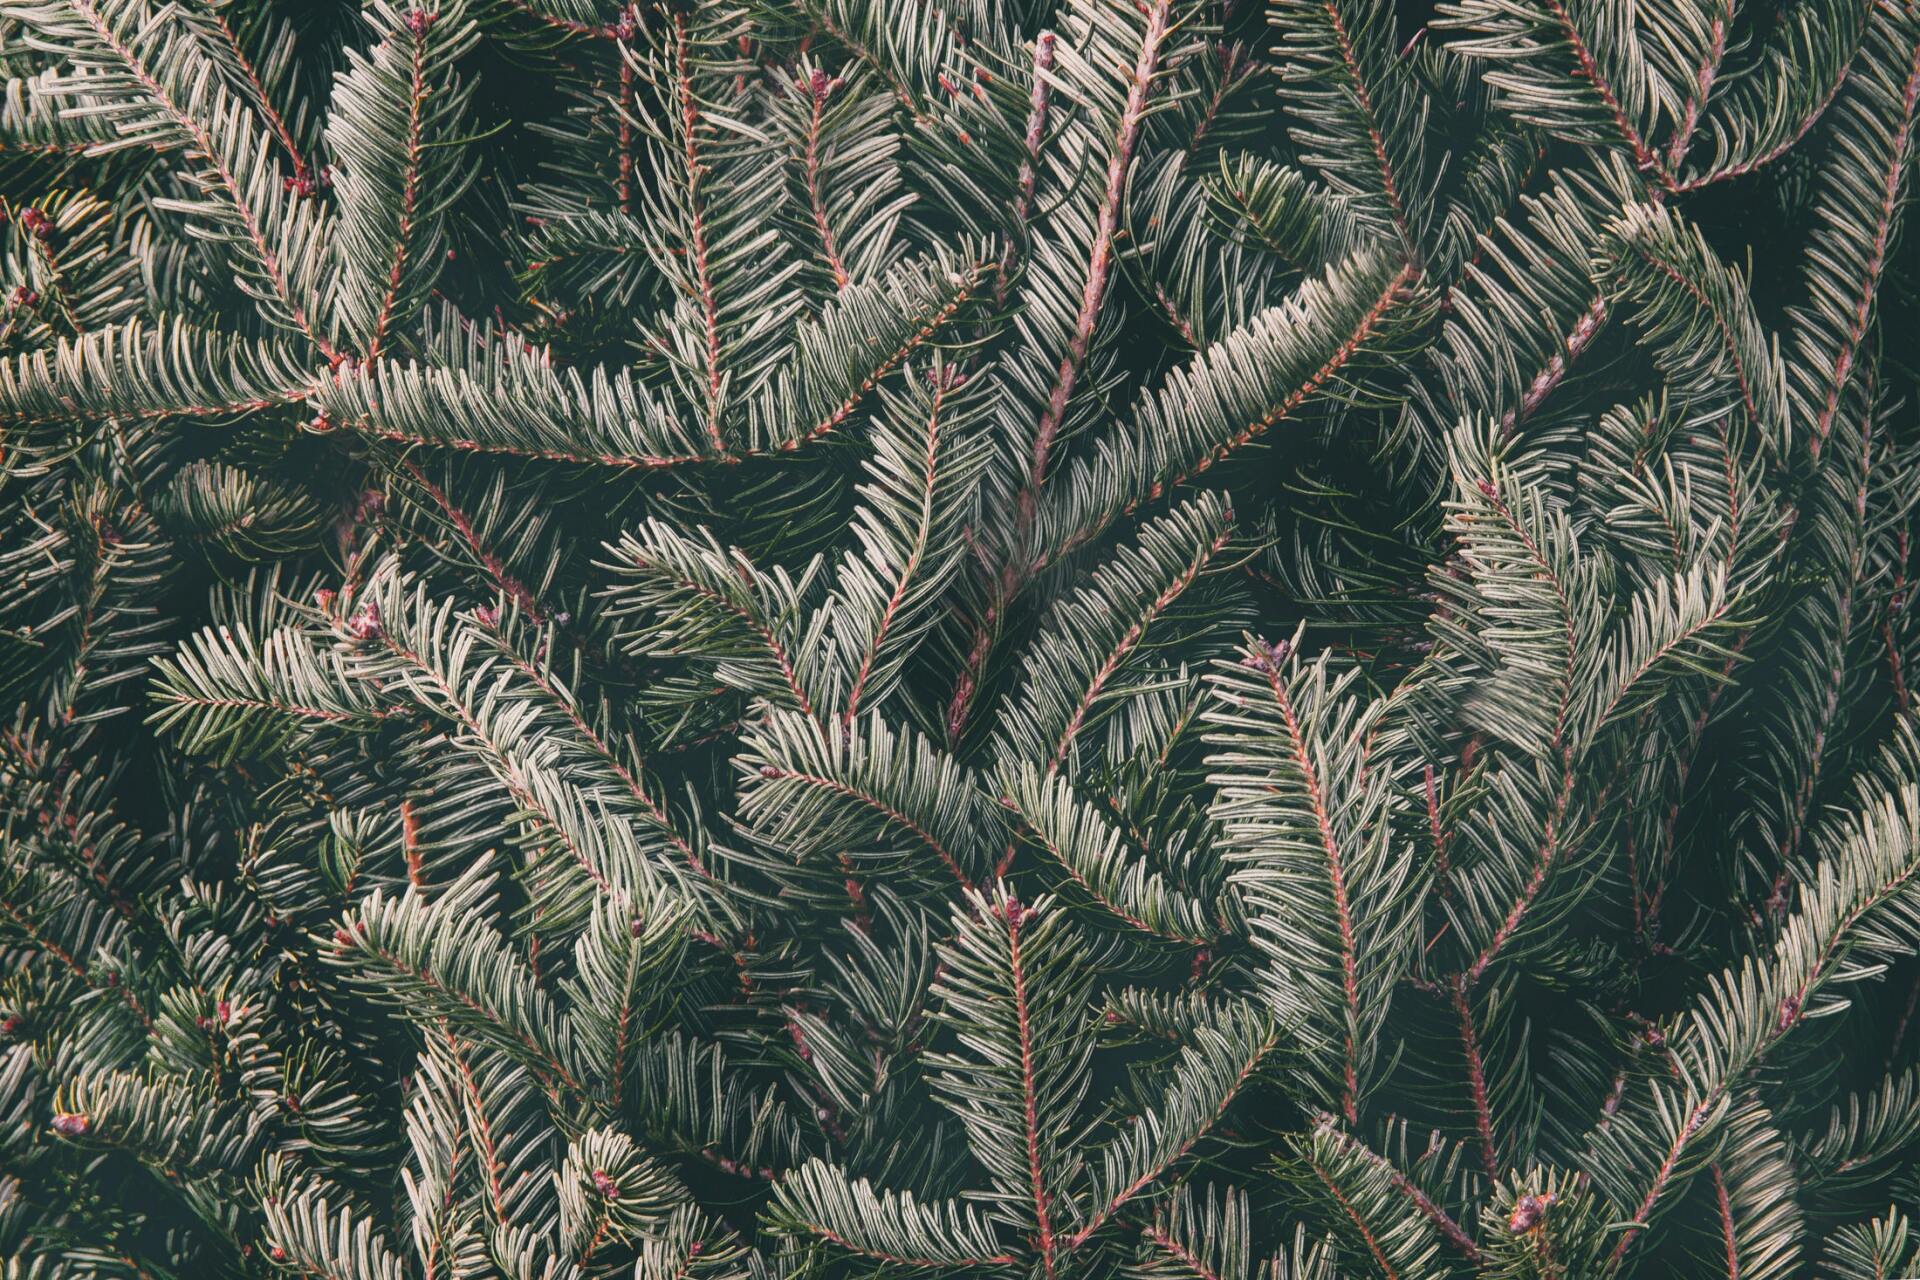 Christmas Tree, concolor fir